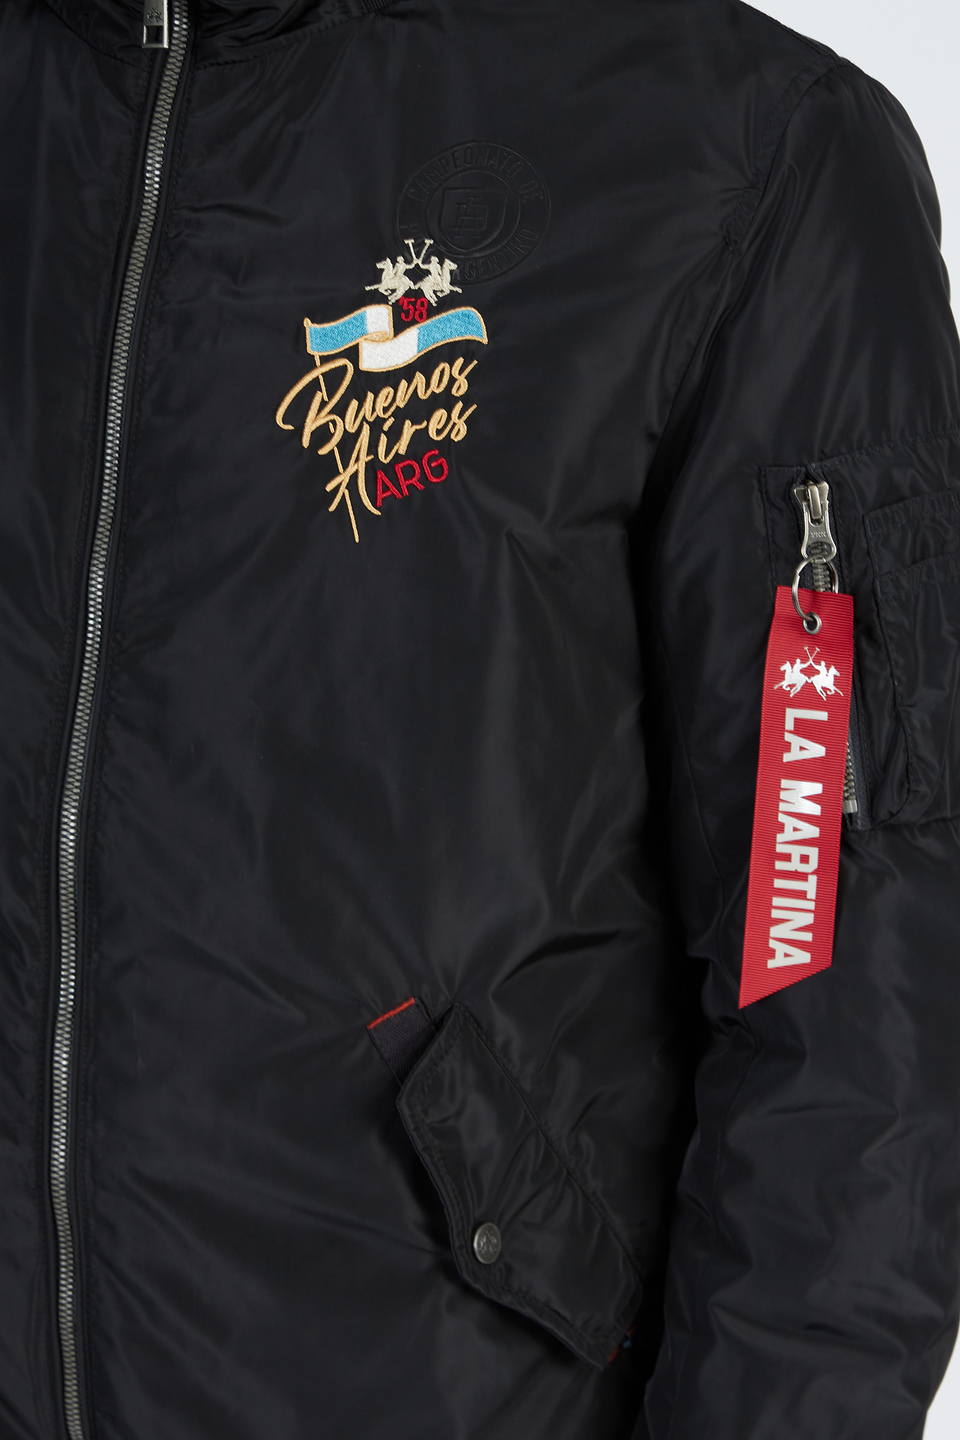 Men’s bomber jacket in nylon Leyendas Del Polo with zip in regular fit | La Martina - Official Online Shop